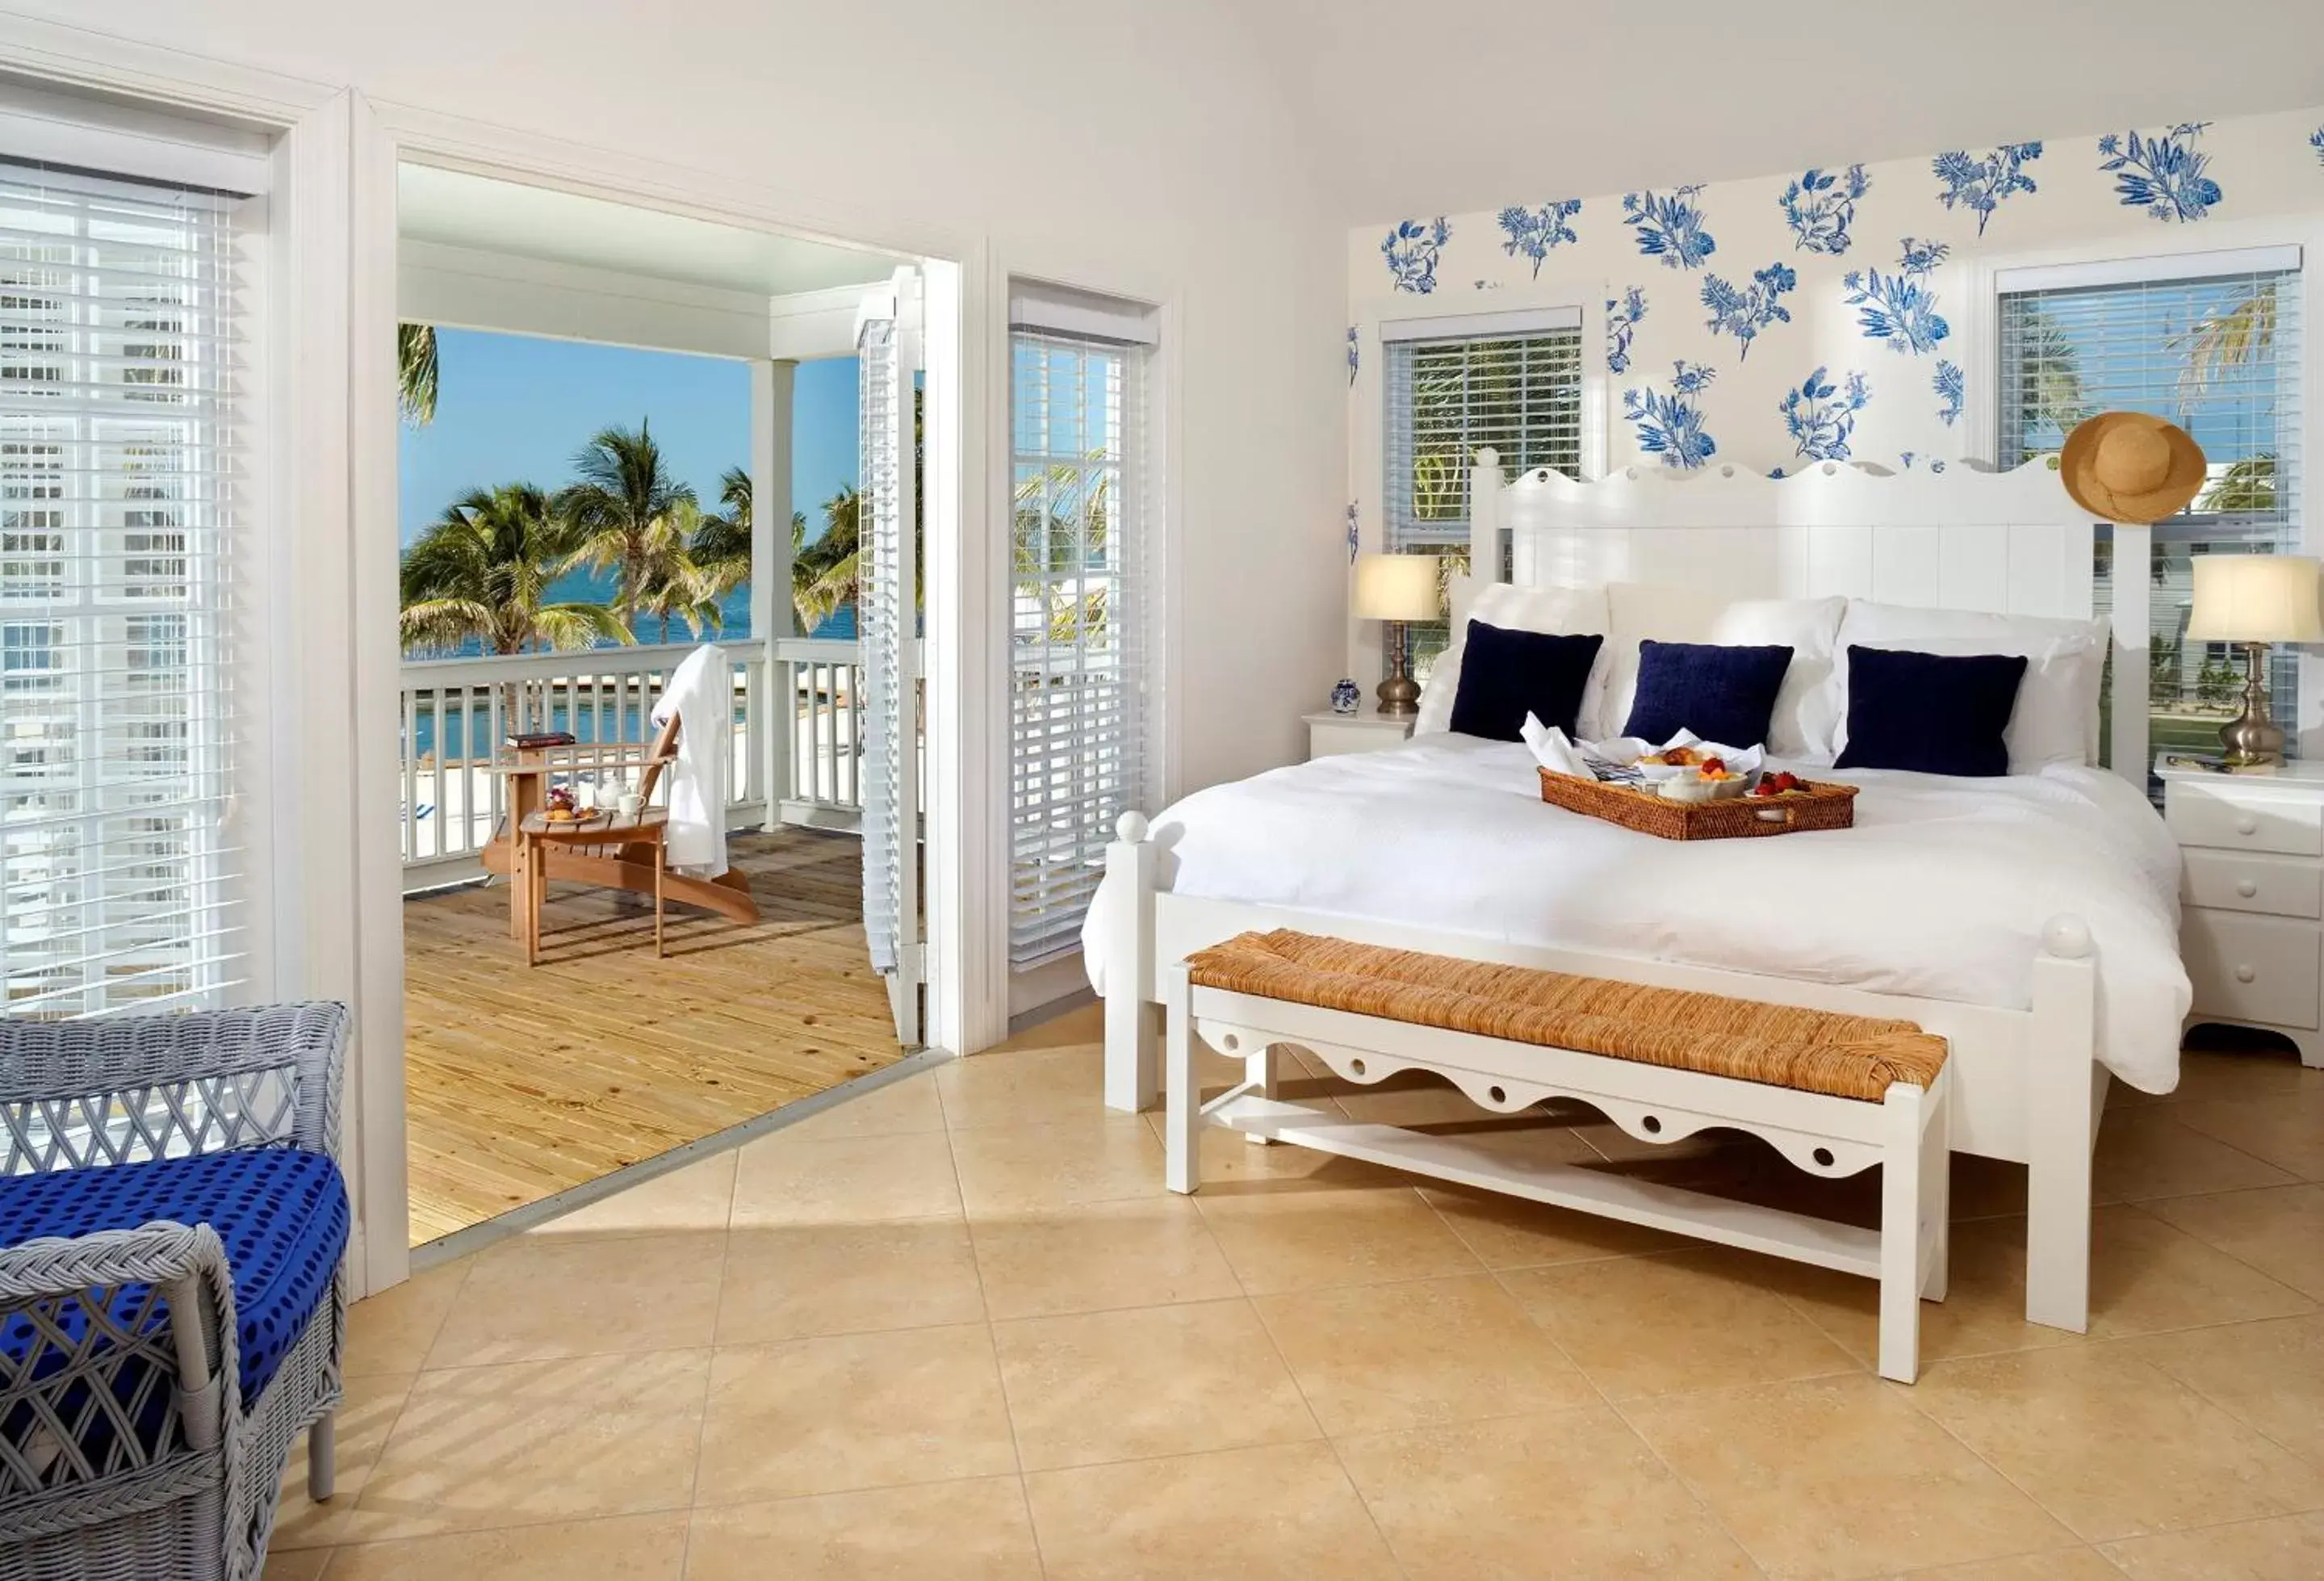 Bedroom in Tranquility Bay Resort